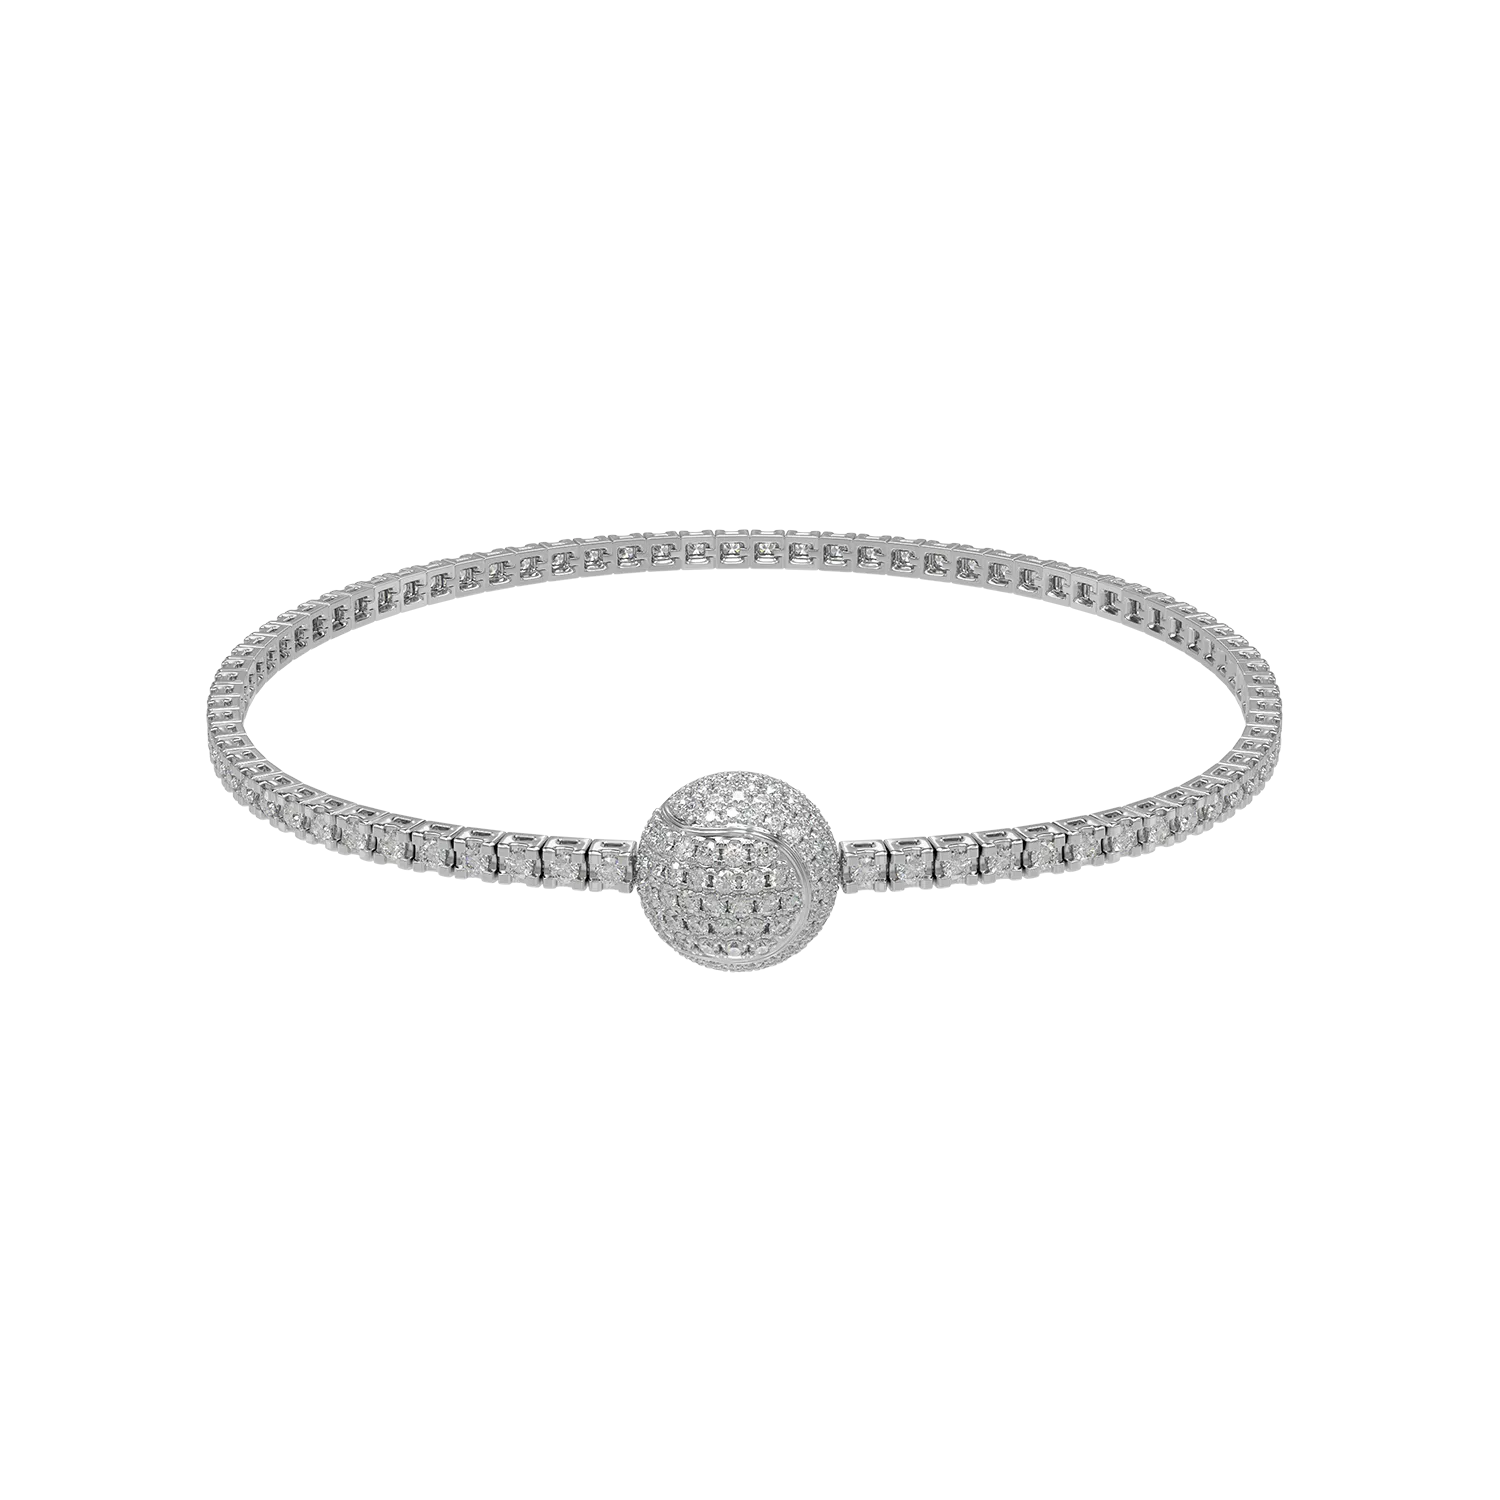 Legacy tennis bracelet with 1.782ct diamonds